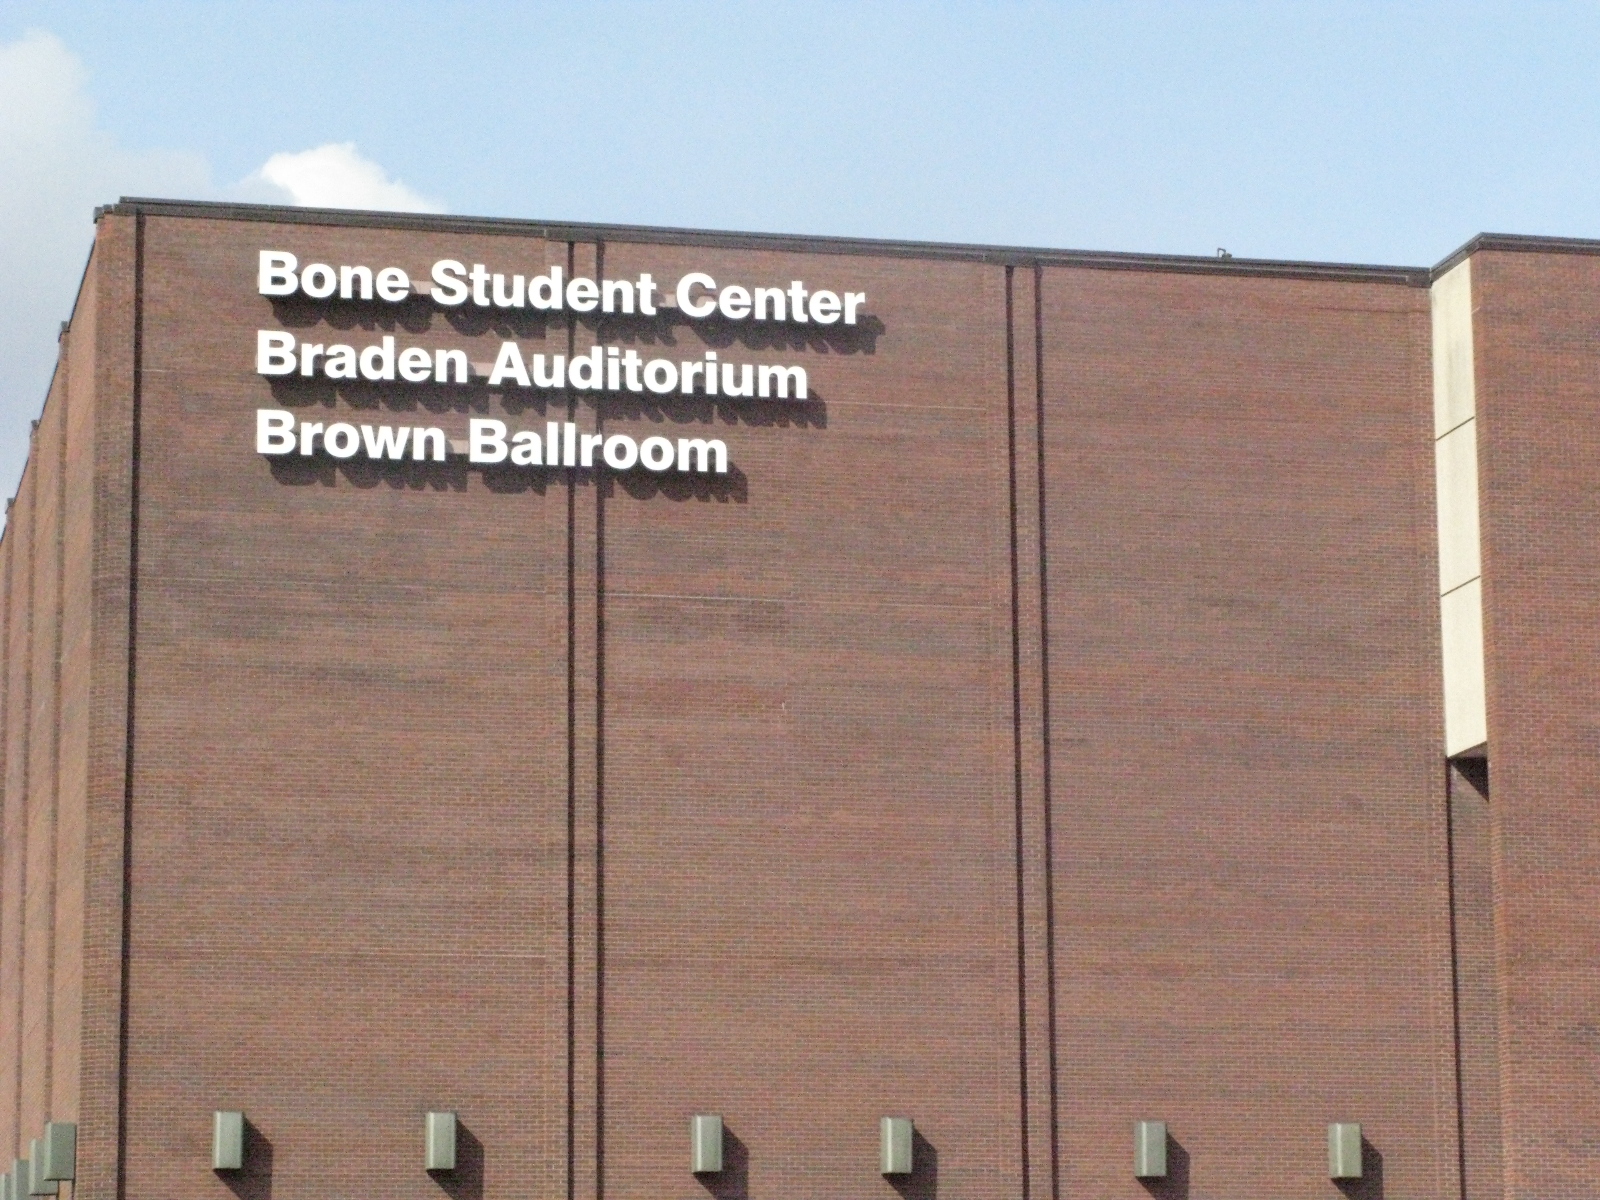 exterior of the Bone Student Center